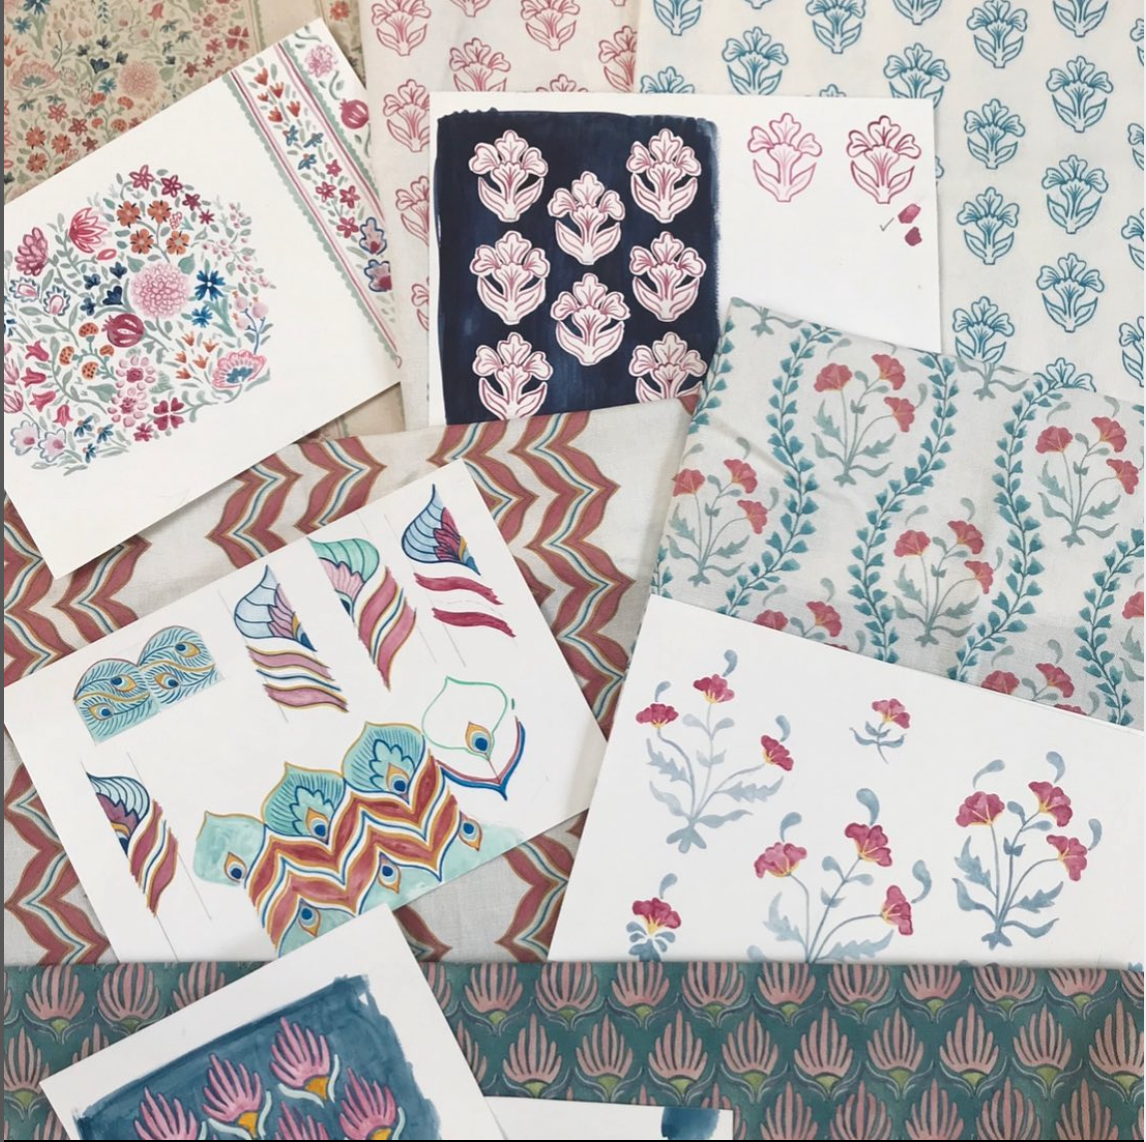 pardis fabric collection textiles with original watercolour templates by felicity buchanan designs